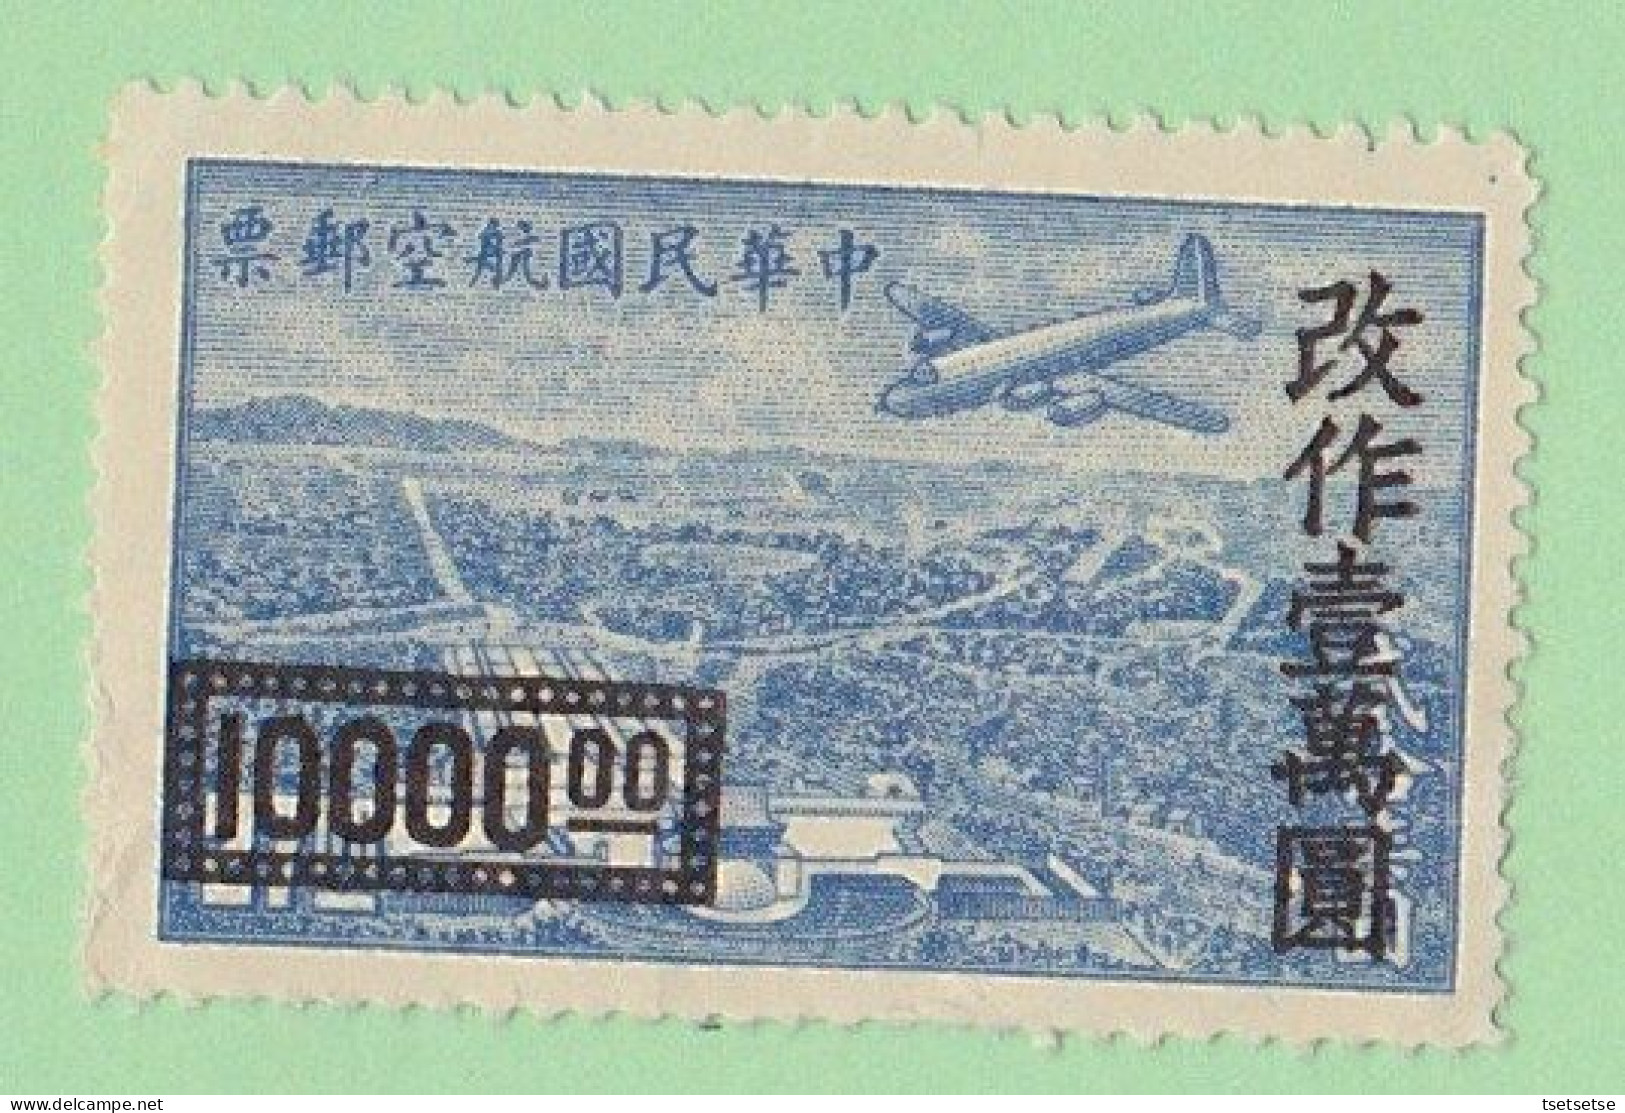 $95 CV! 1961/2 RO China Taiwan 2 Set Stamps, #1327-30,1342-43 Unused, VF OG + #C61 - Ungebraucht